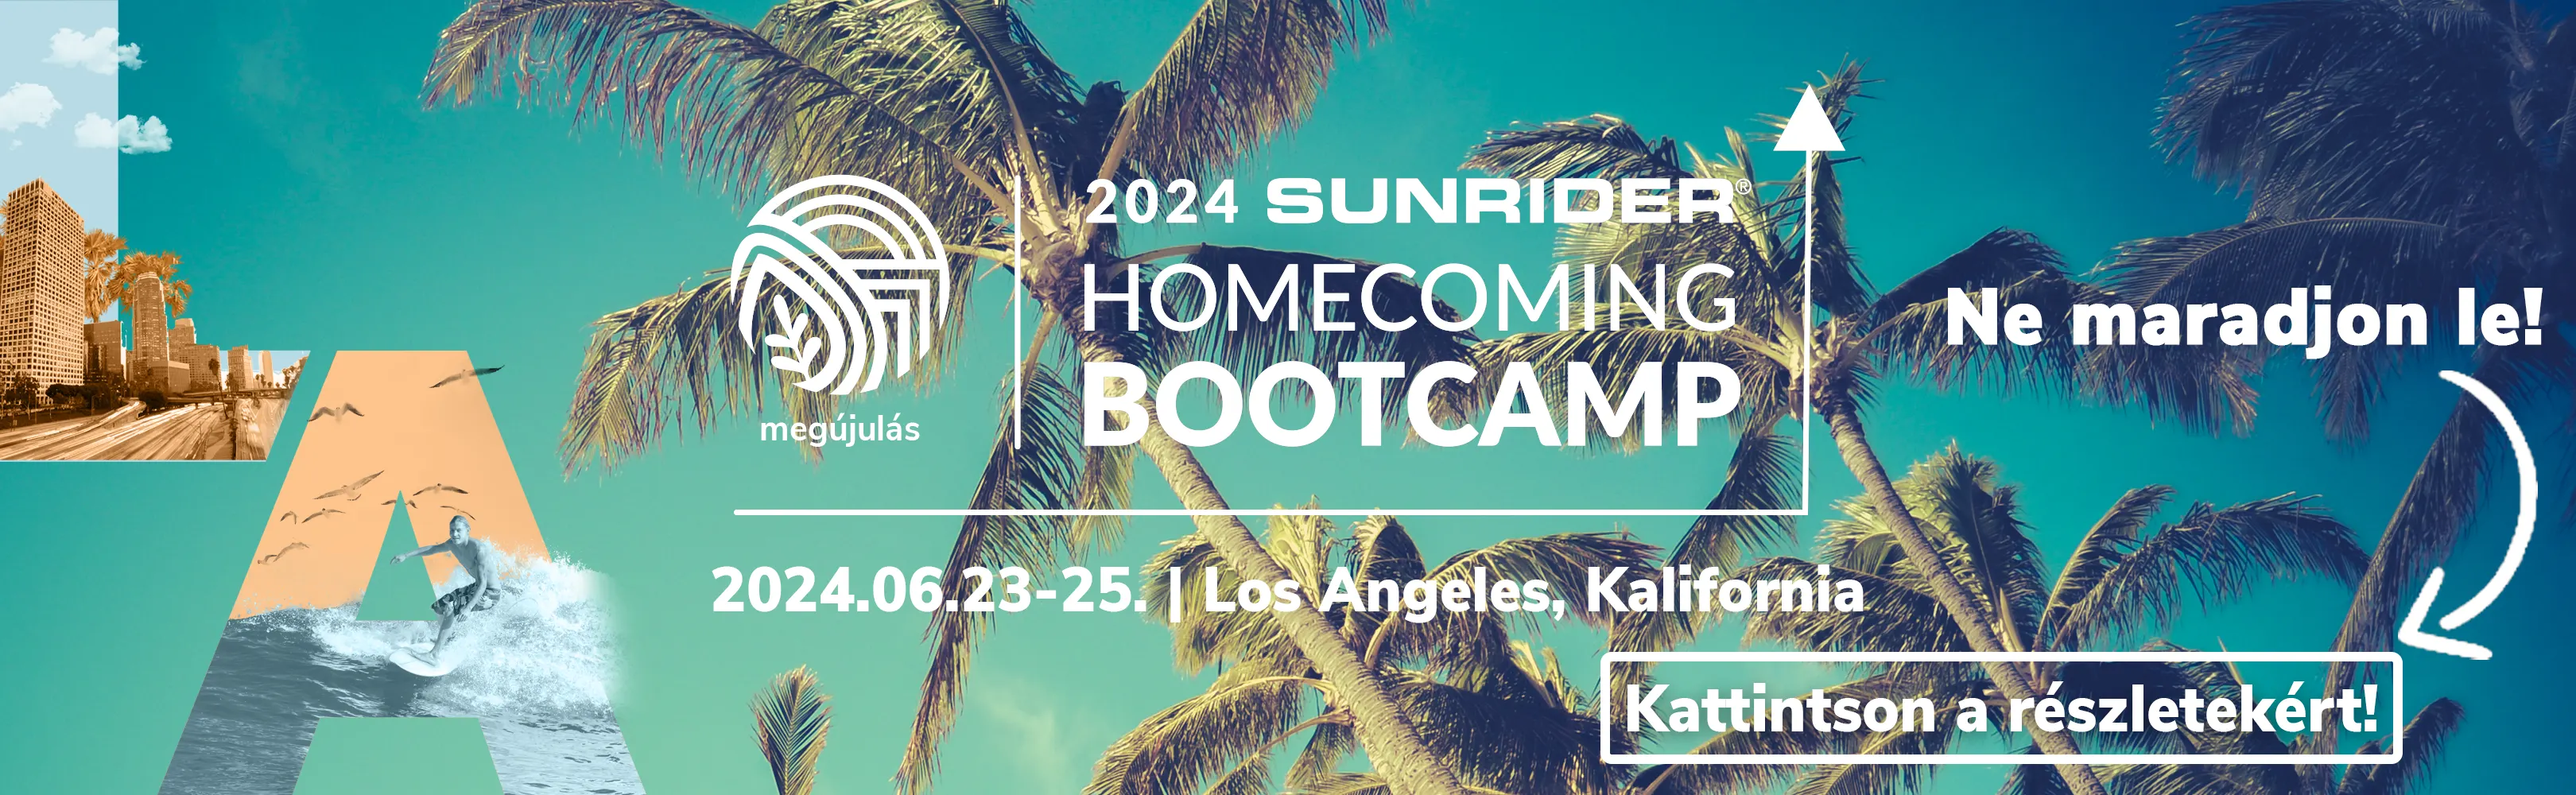 [HU] 2024 Homecoming Bootcamp